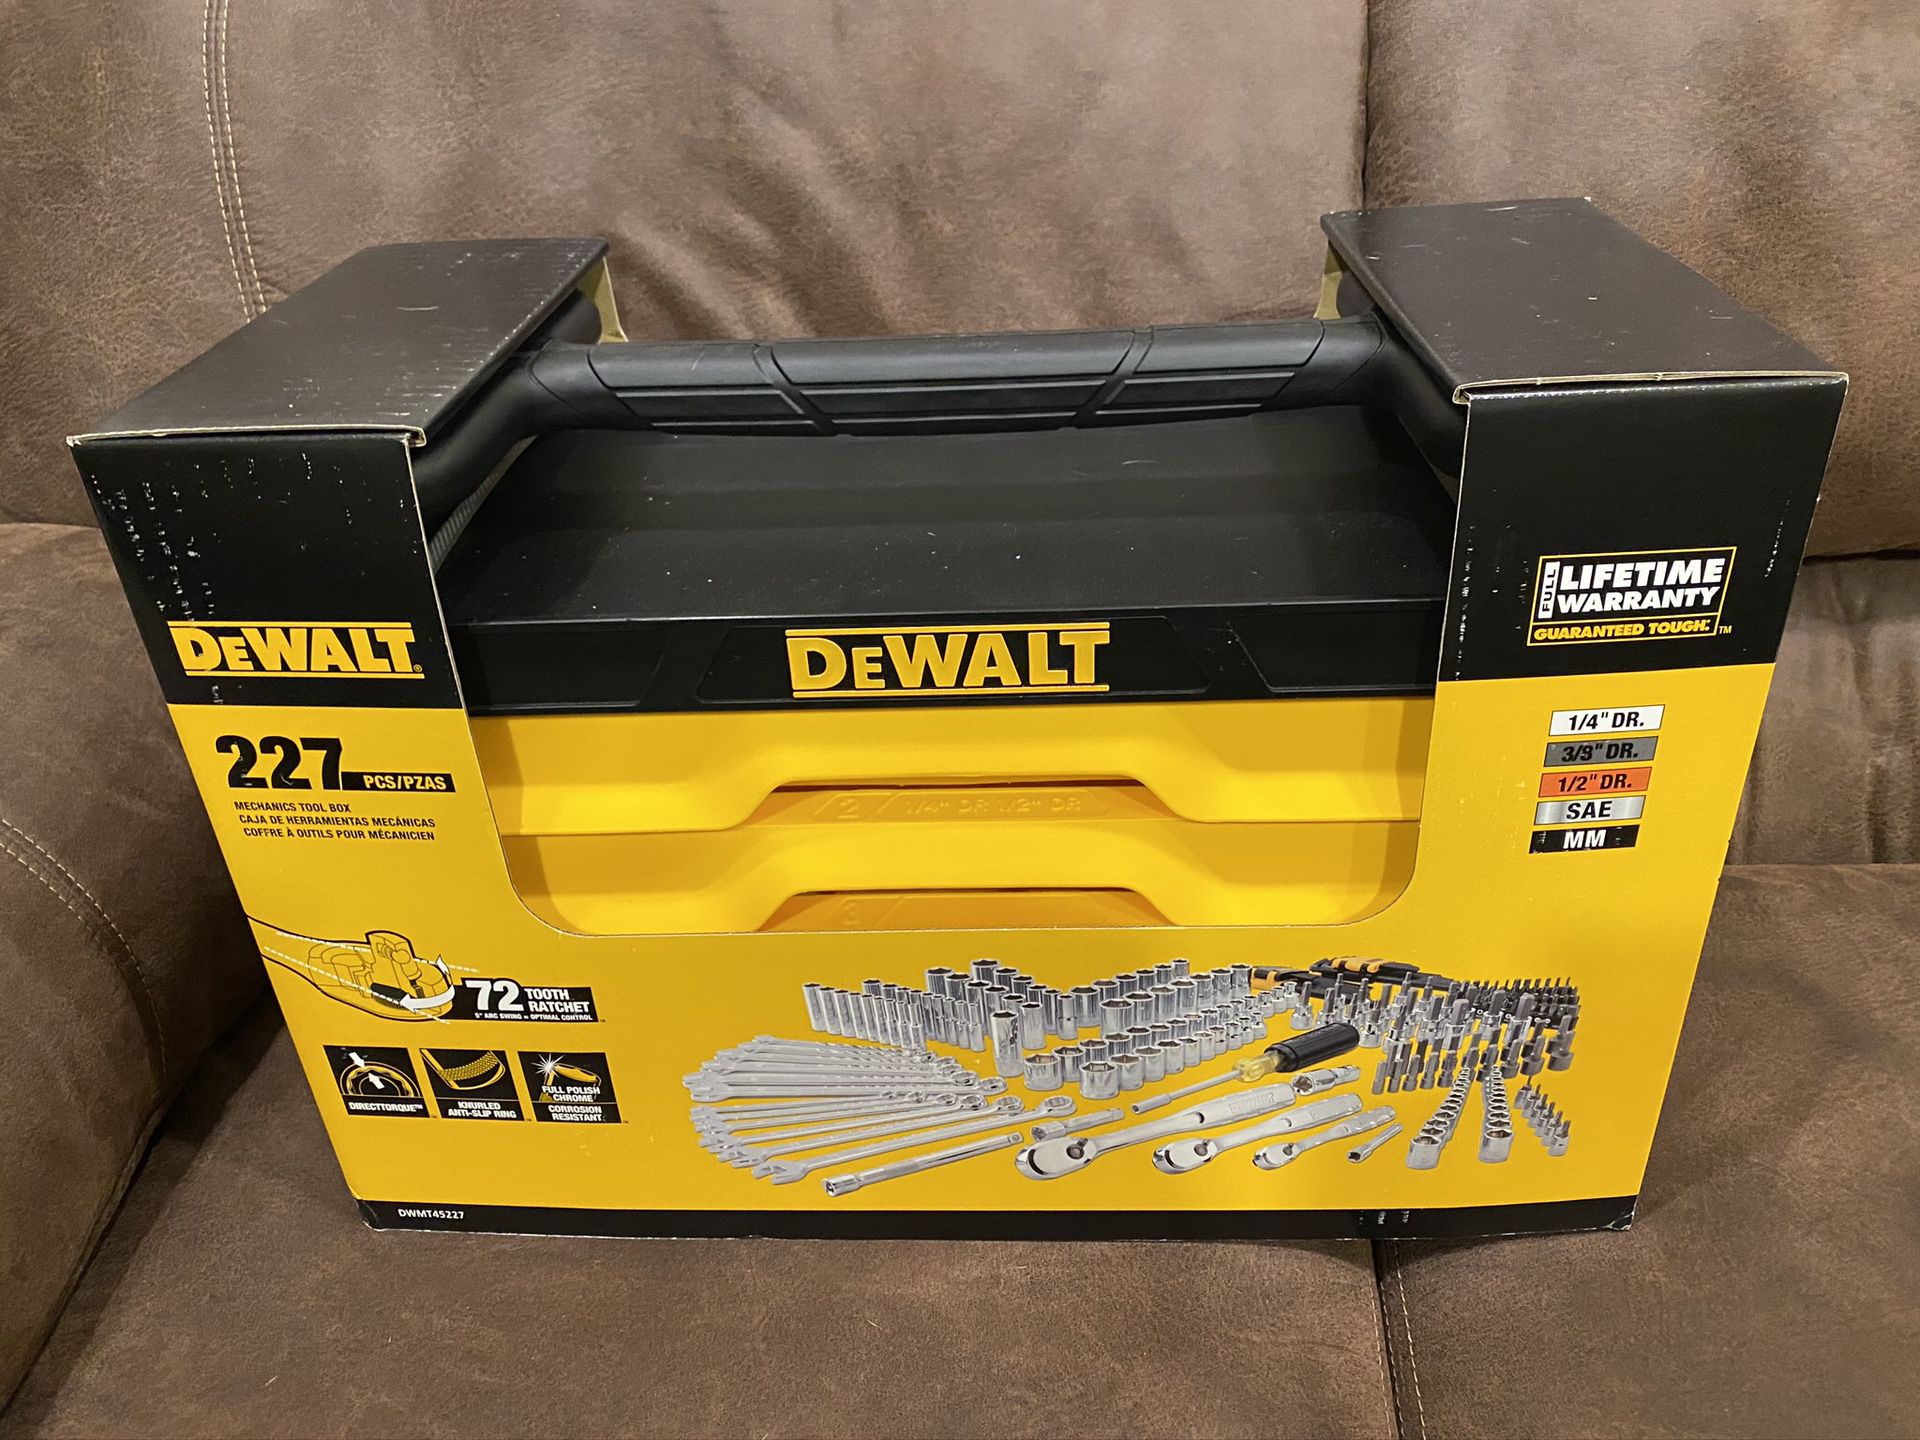 Dwmt45227 227 pcs hand tool kit with carring dewalt tool box NEW